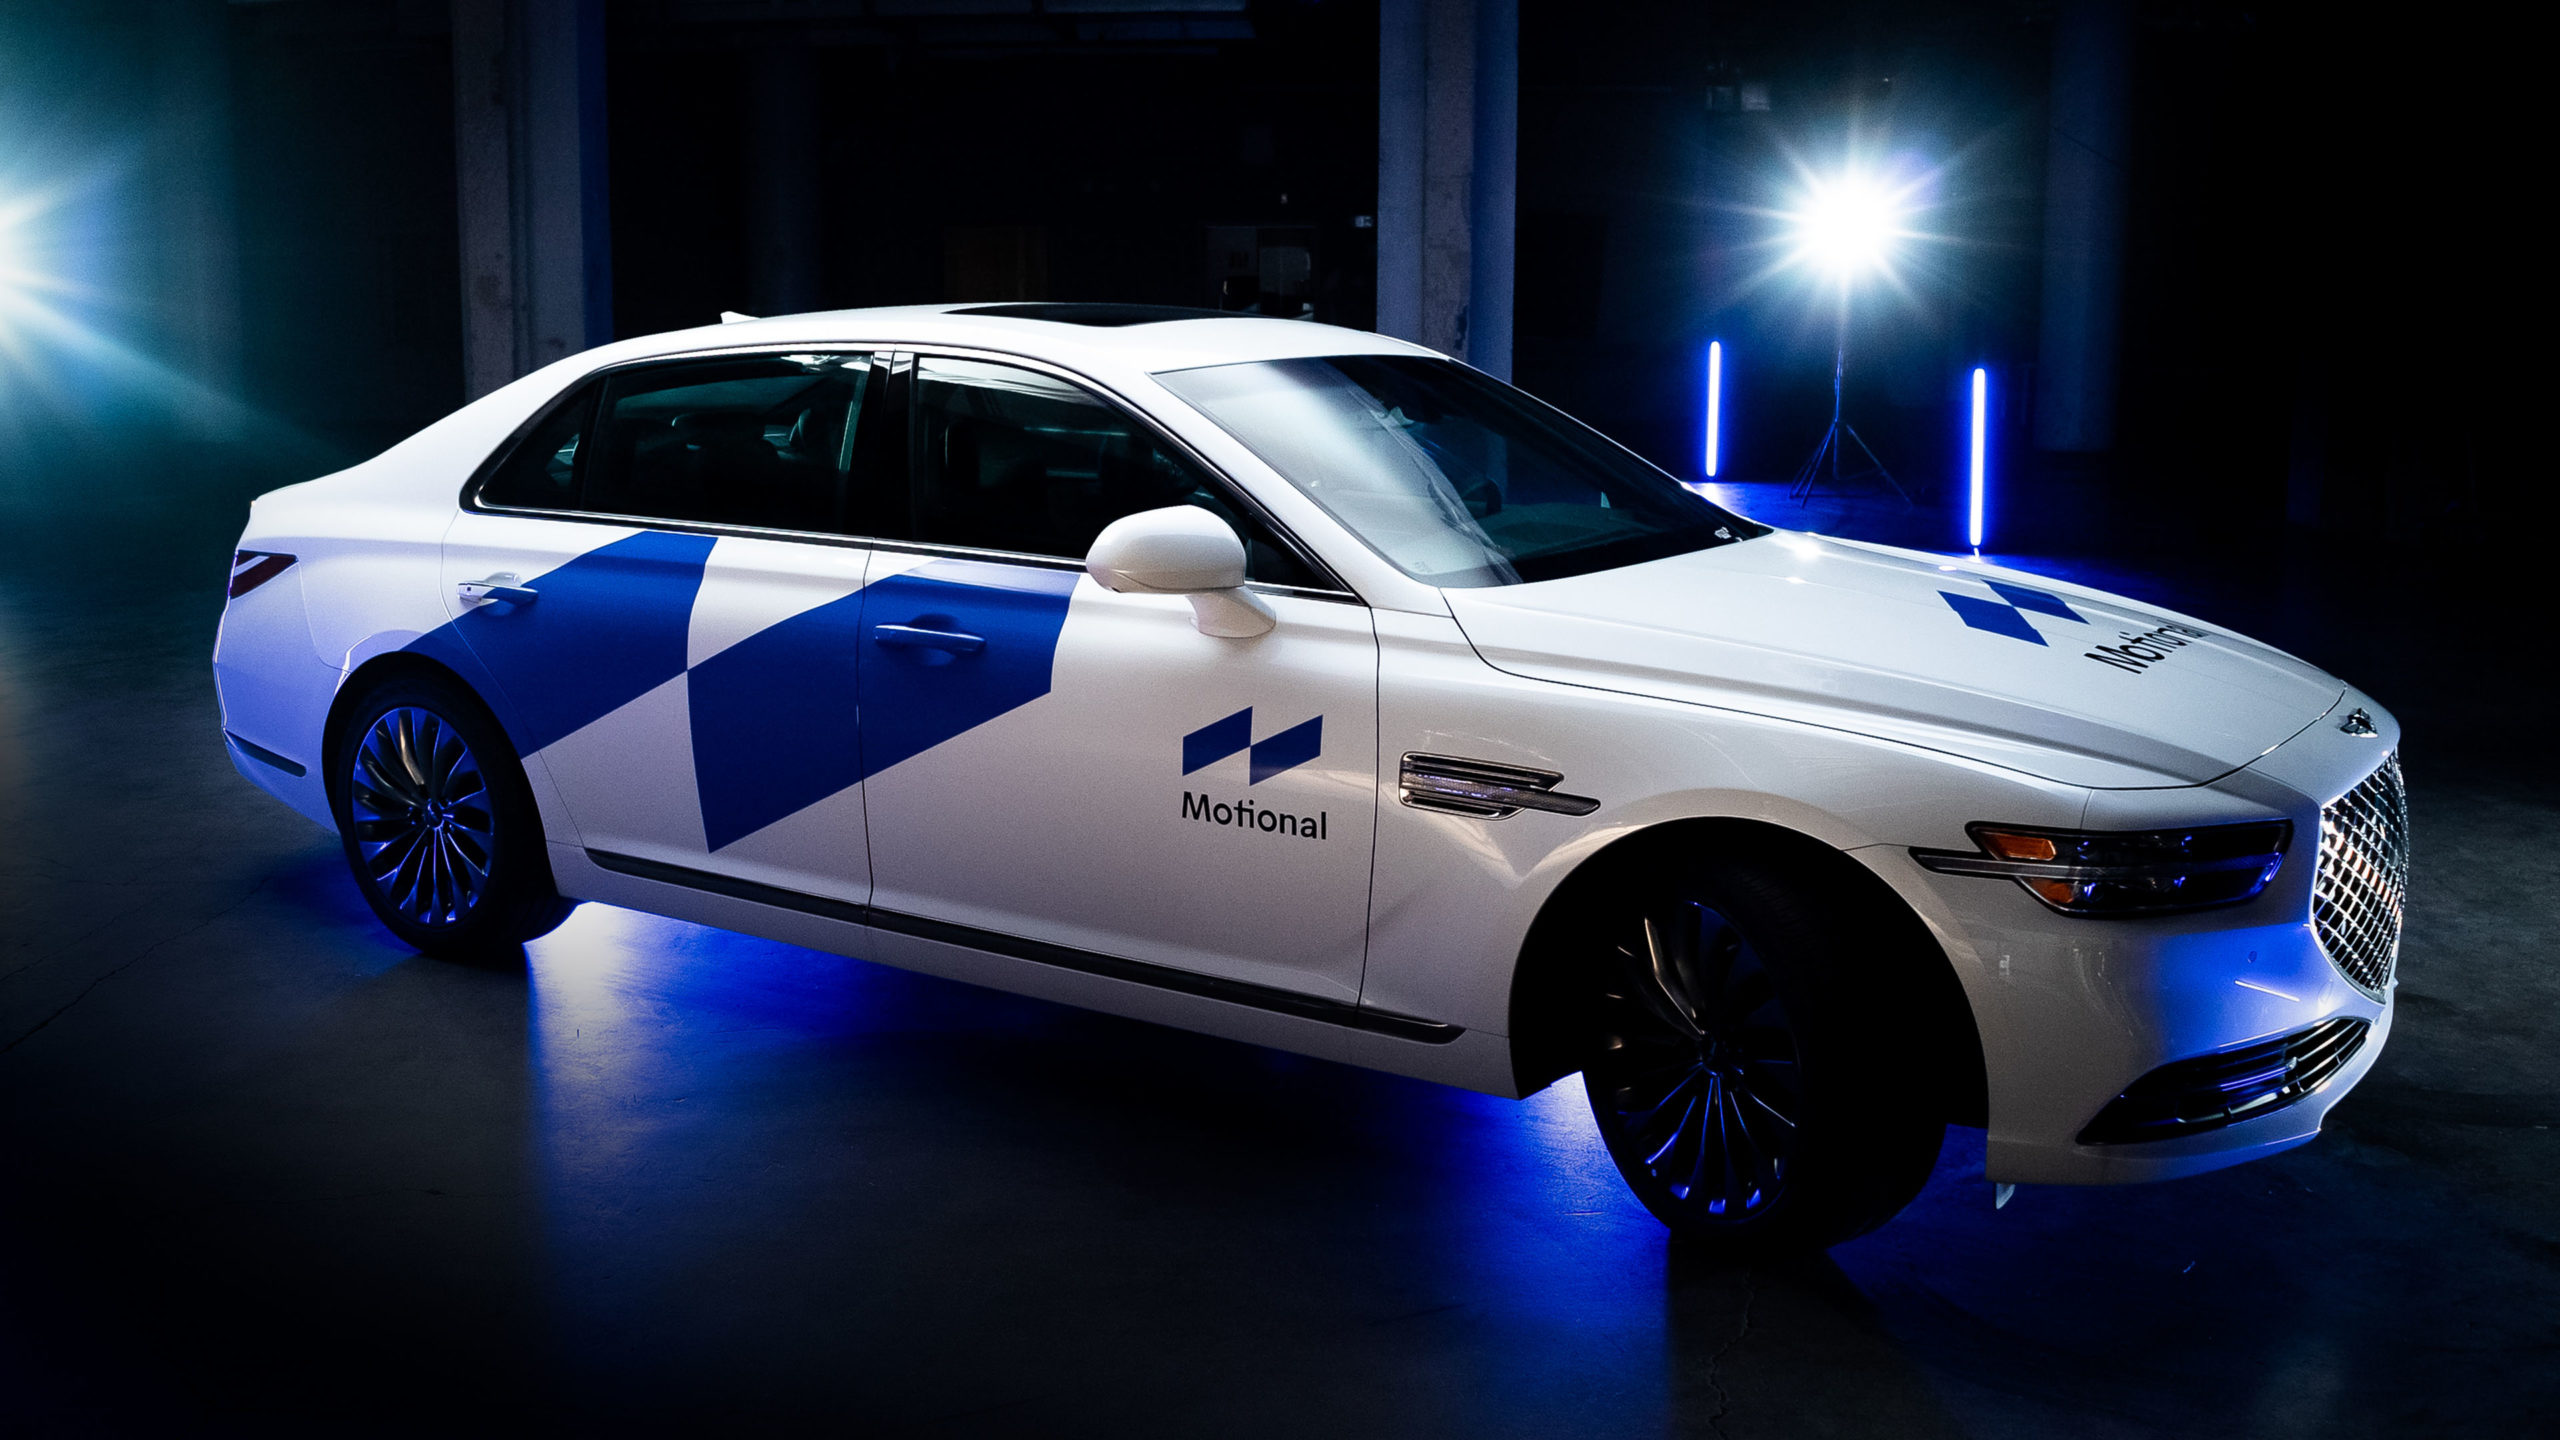 Hyundai-Aptiv autonomous driving venture turns into ‘Motional’